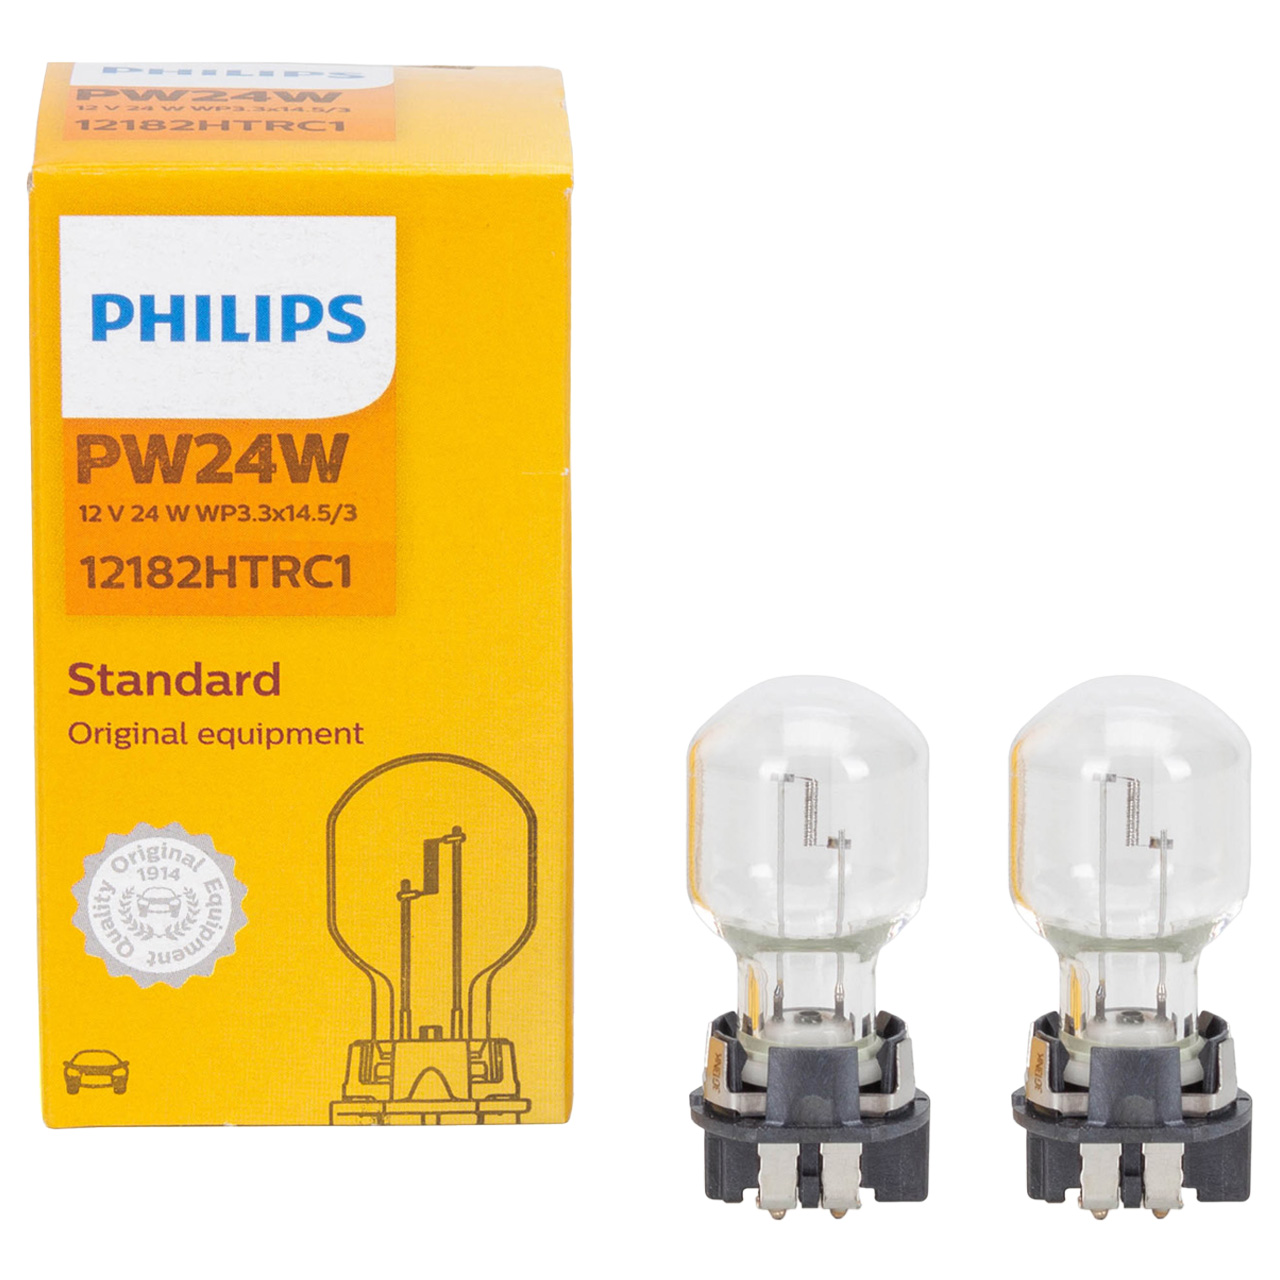 2x PHILIPS Halogenlampe Blink- Bremsleuchte Tagfahrleuchte PW24W 12V 24W WP3.3x14.5/3